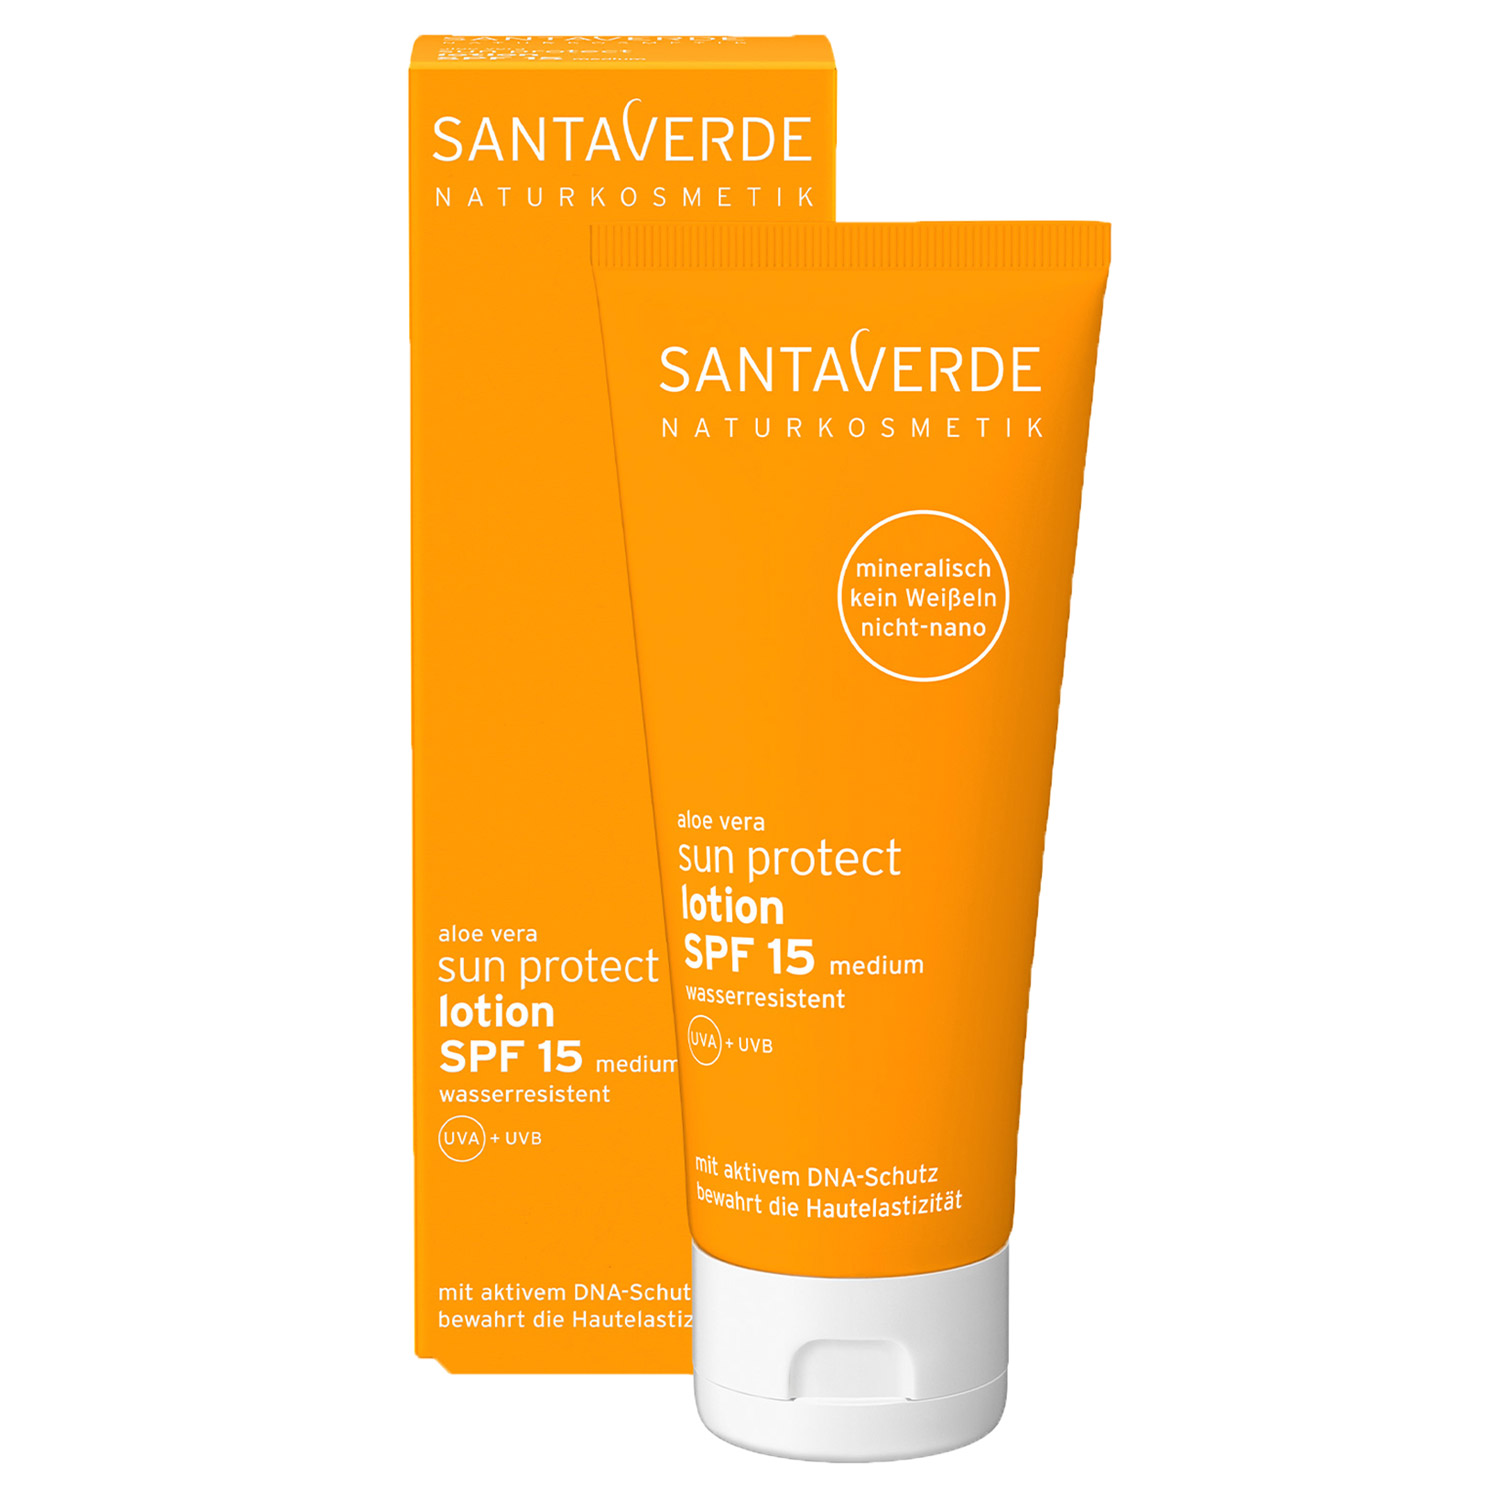 sun protect lotion SPF 15 von Santaverde -100 ml